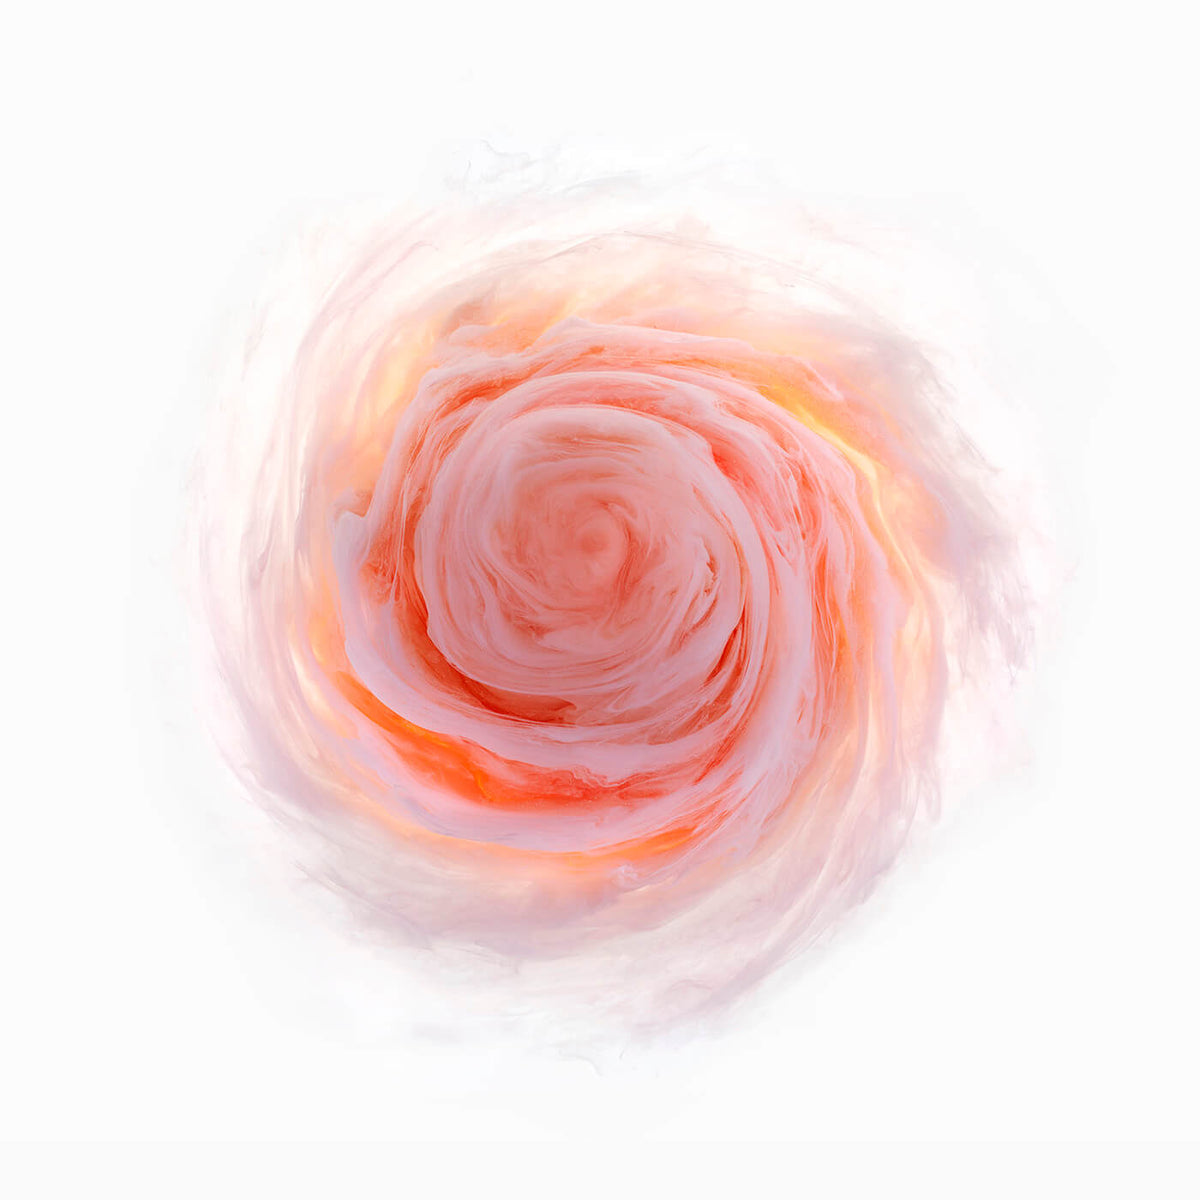 Mark Mawson Aqueous Roses 6 for Modern ArtBuyer